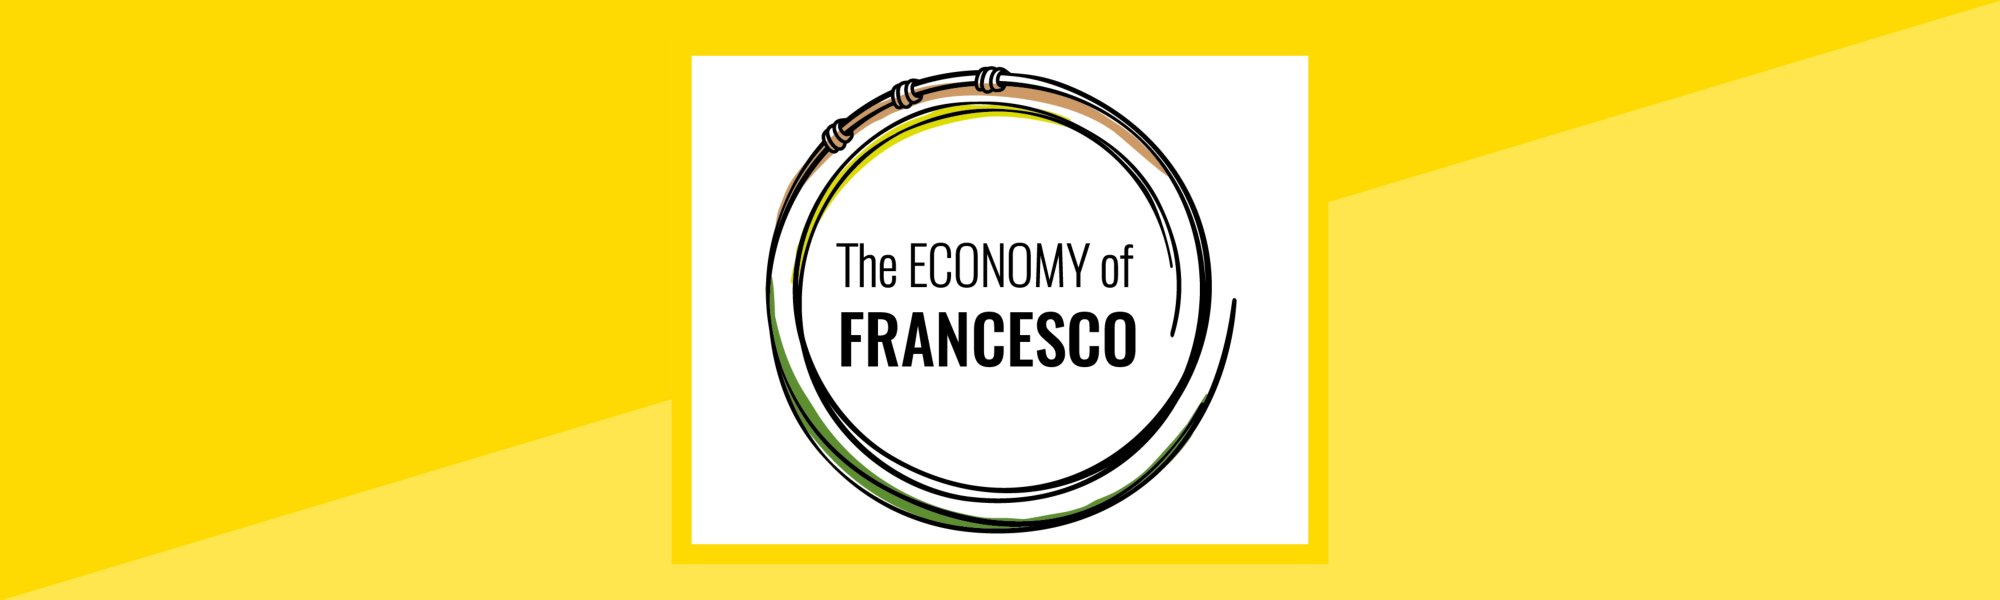 Franciscan Economics & Corporate Responsibility